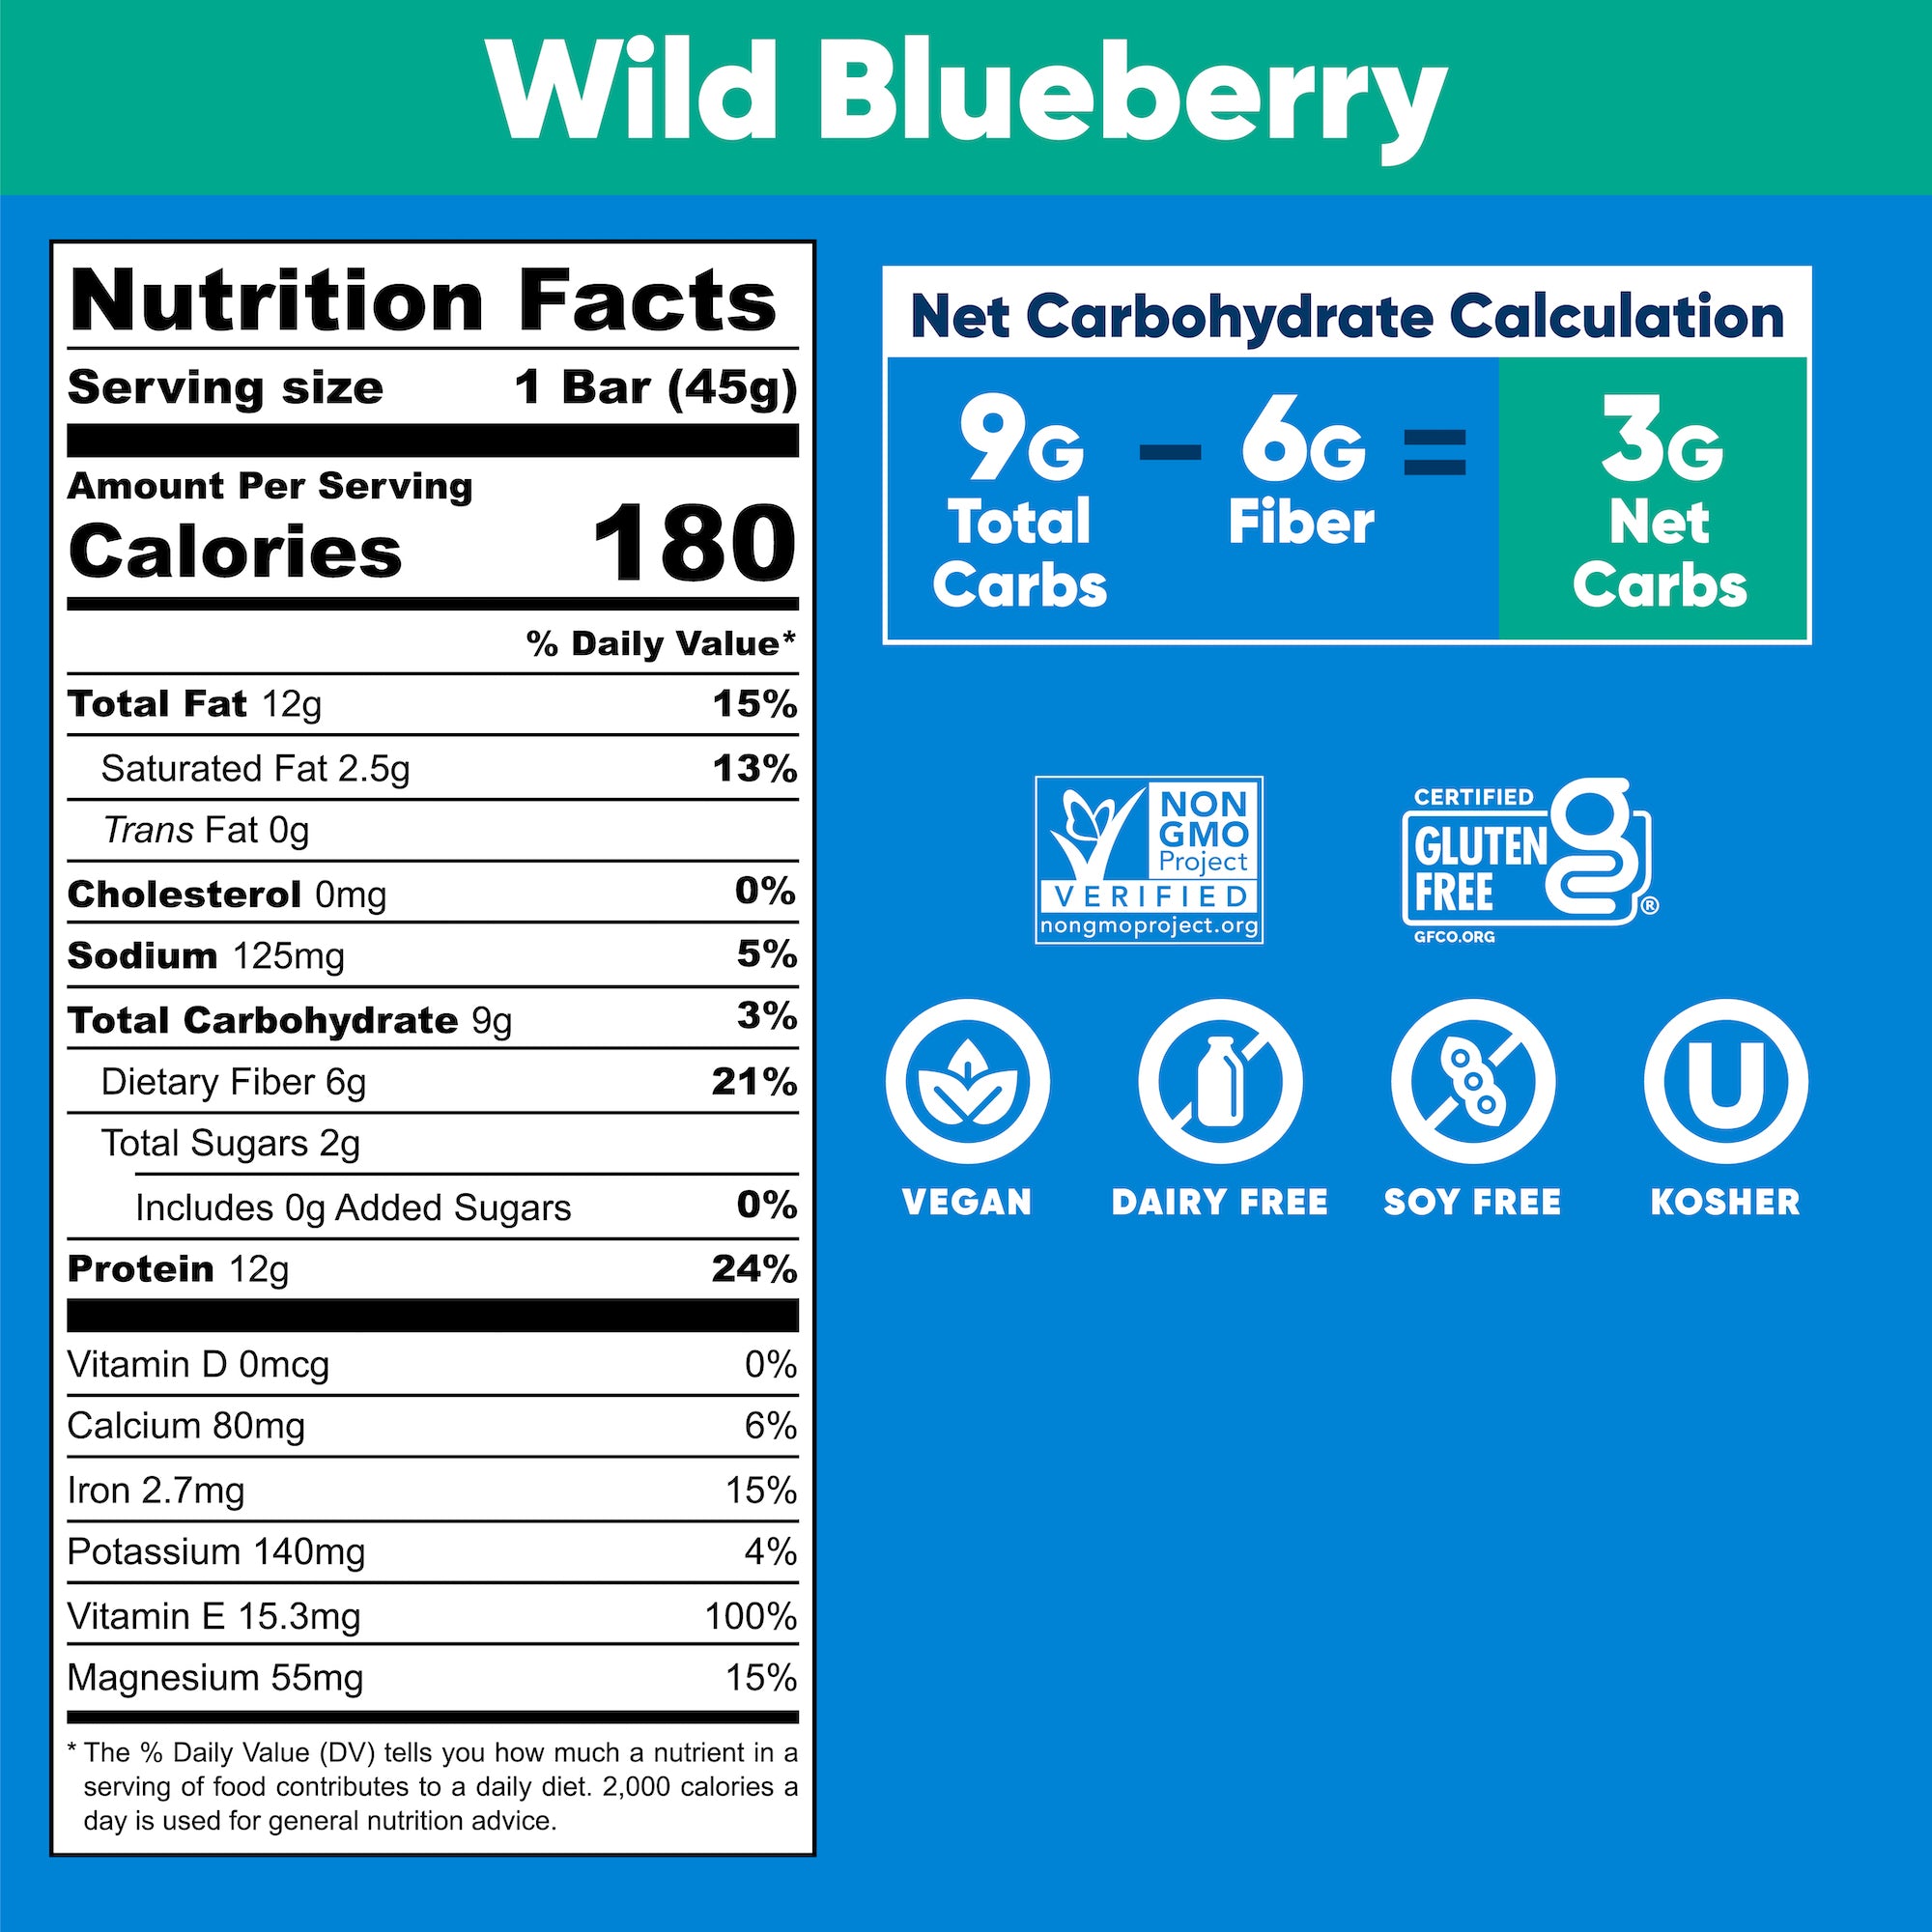 Lemon Blueberry Net Carb Calculation. 11 grams Total Carbs – 8 grams Fiber = 3 grams Net Carbs.